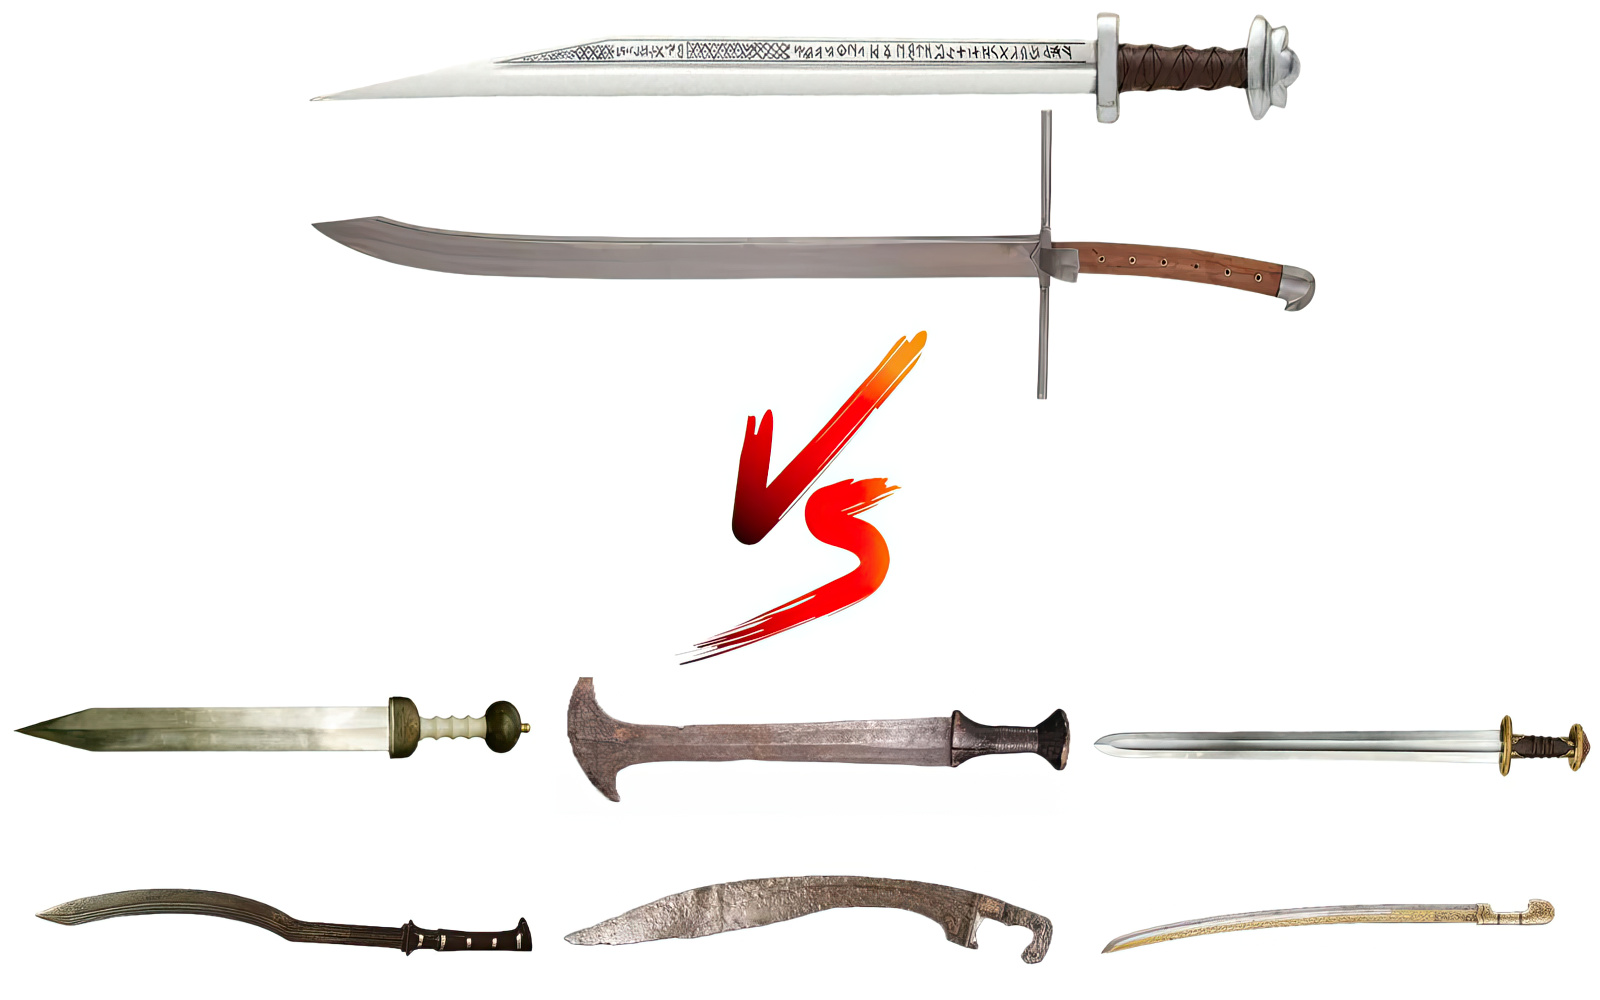 Long Knife vs Short Sword: What Makes Them Different?